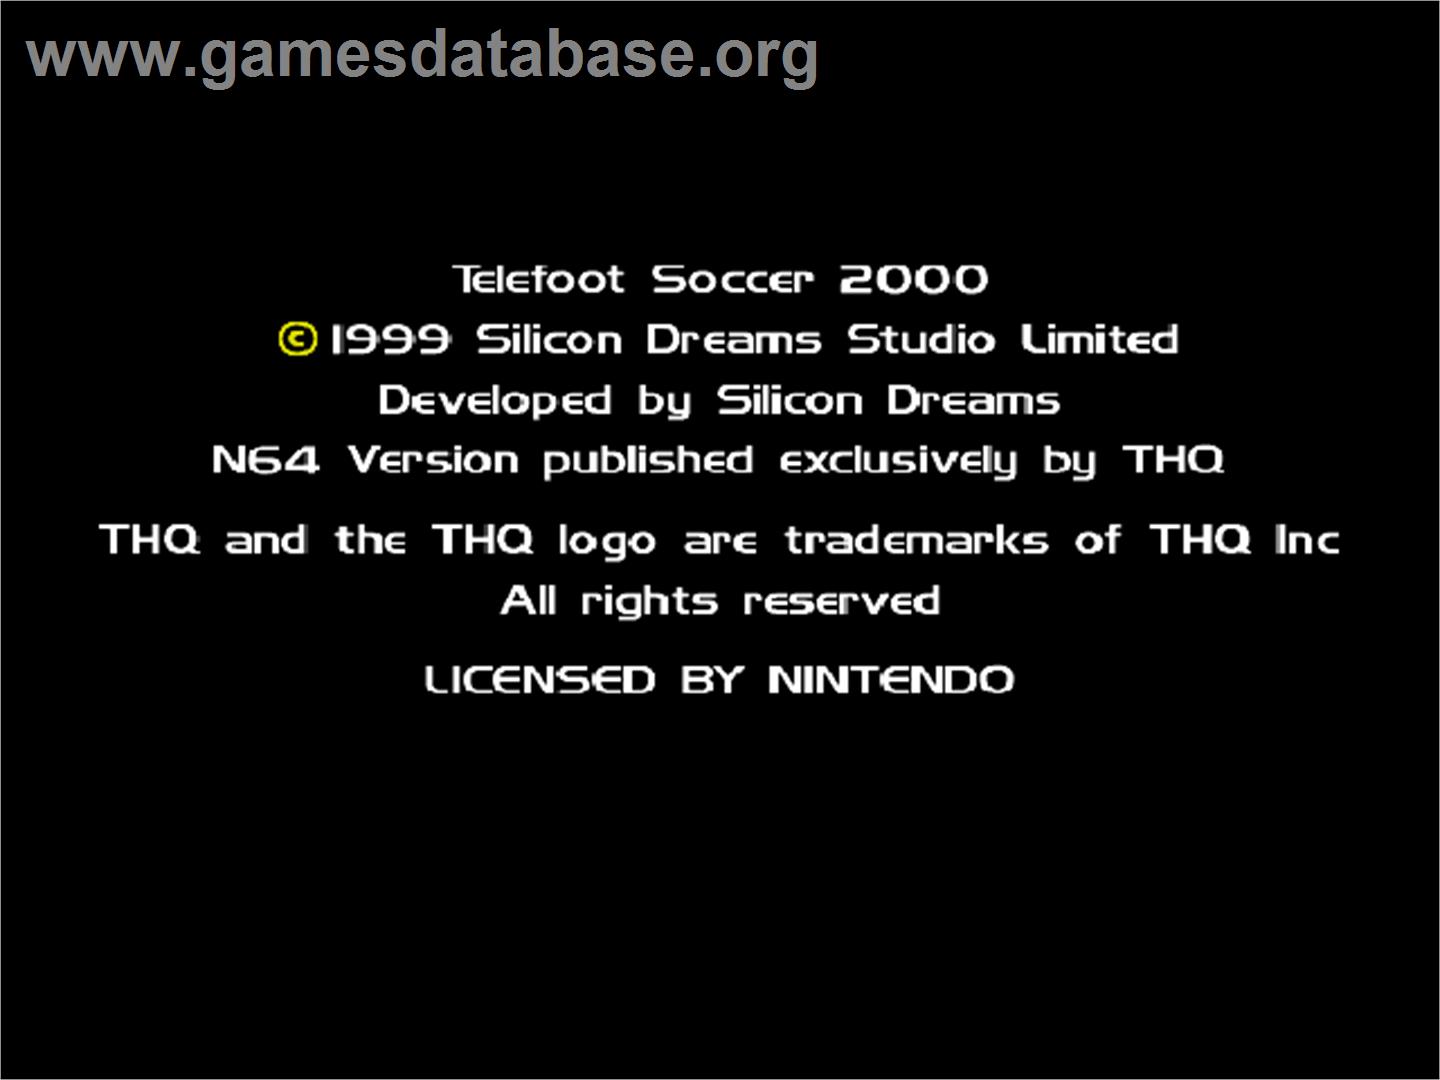 Telefoot Soccer 2000 - Nintendo N64 - Artwork - Title Screen